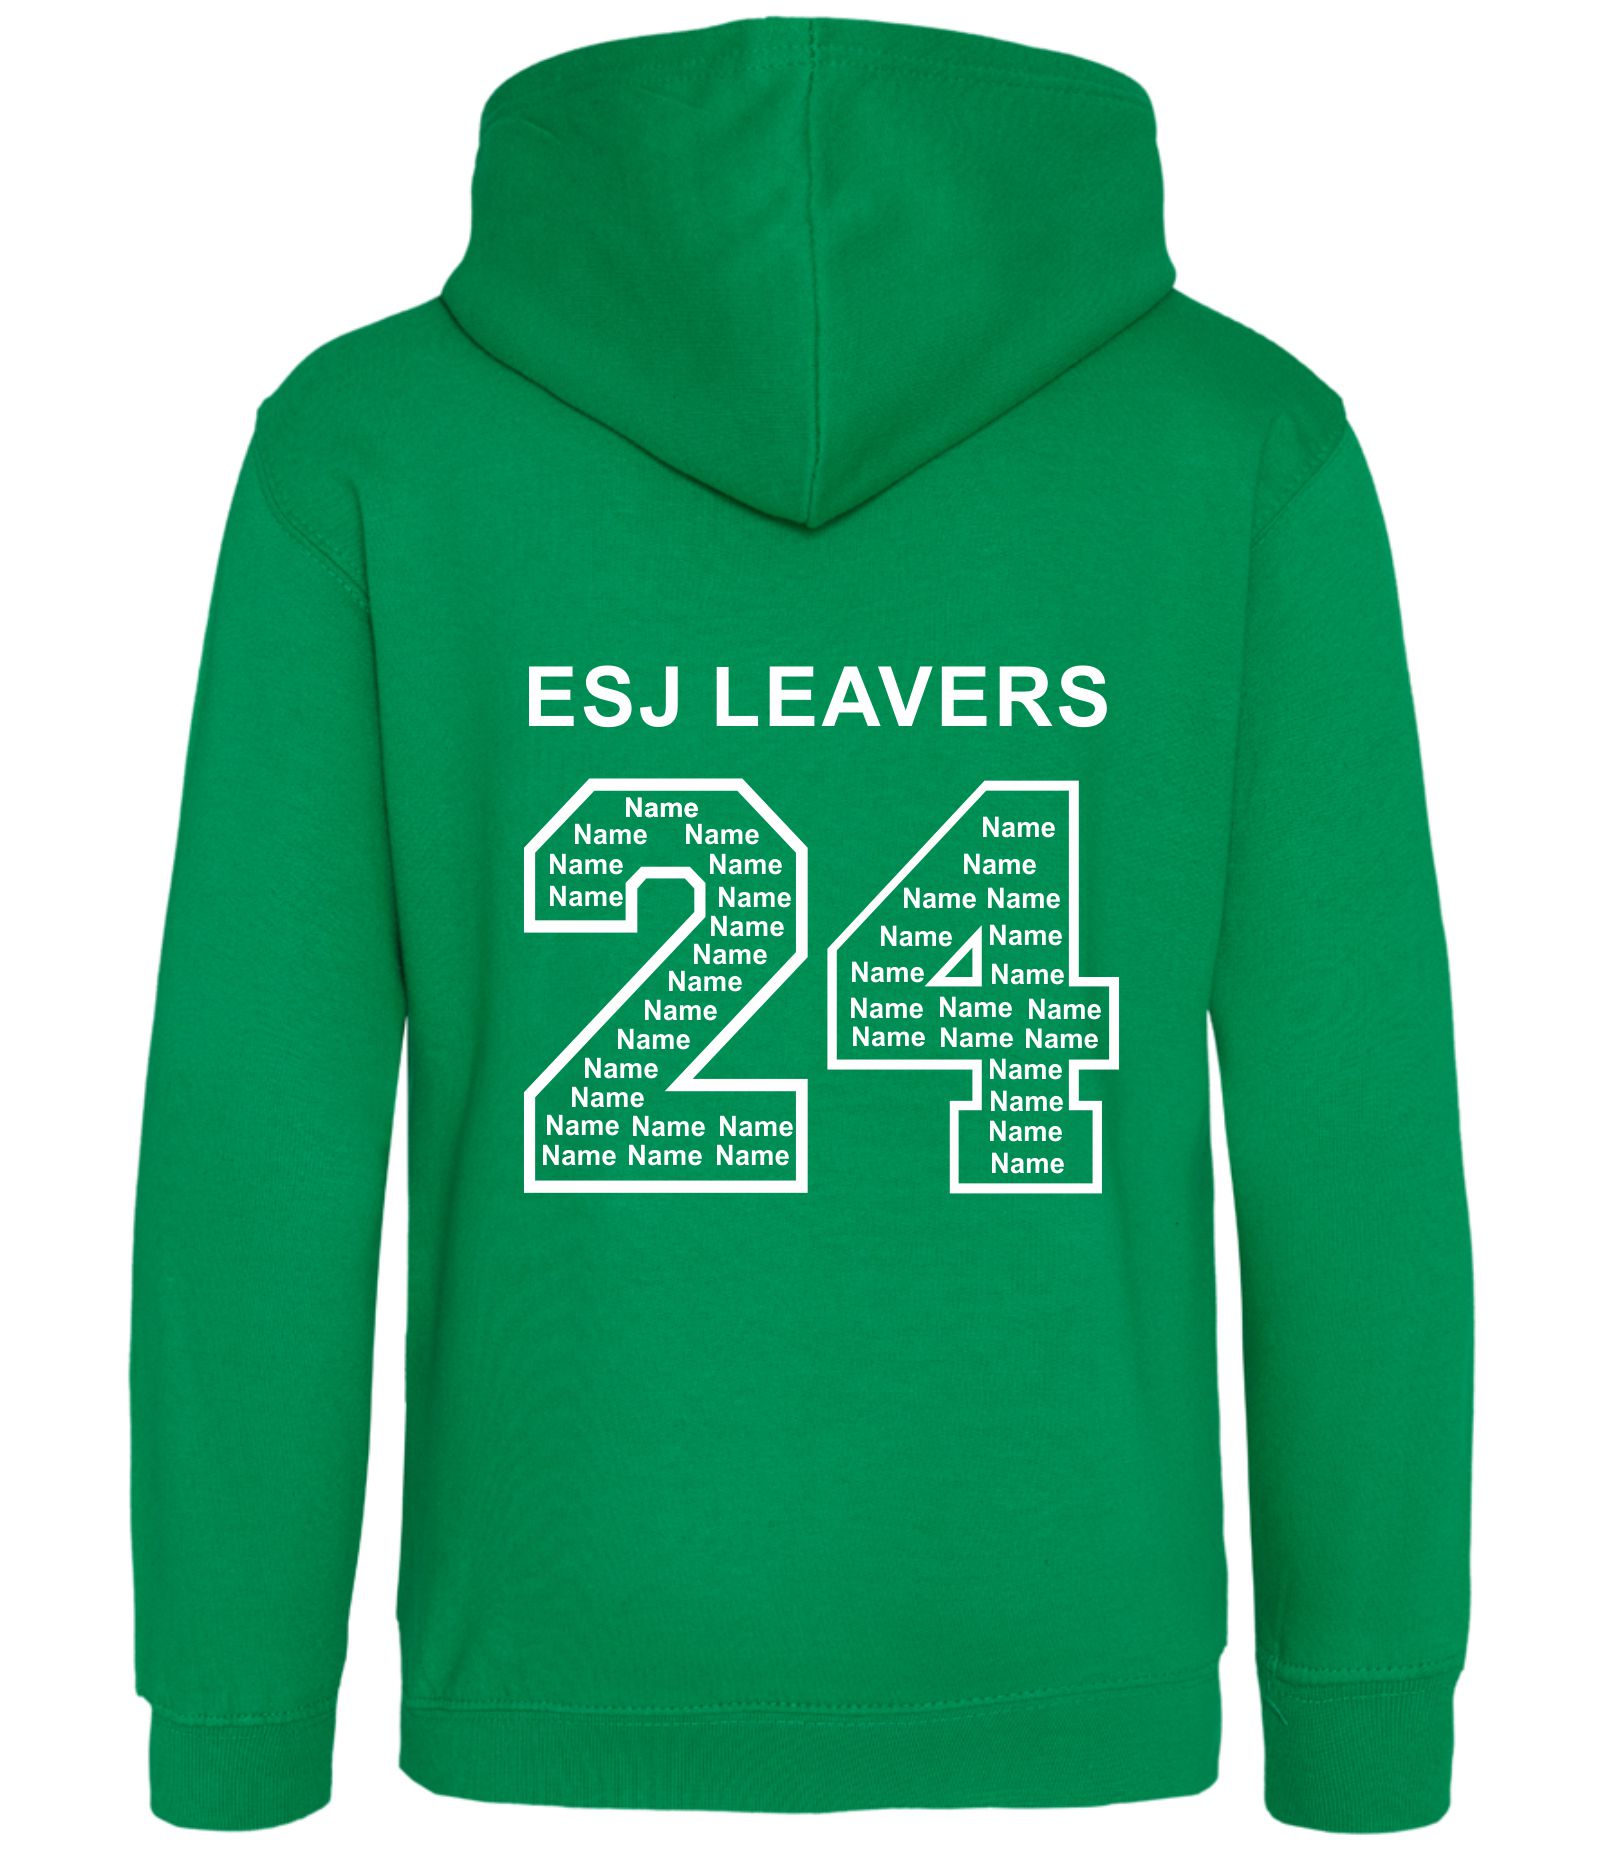 Ely St Johns- Leavers Hoodie (Kids Size)